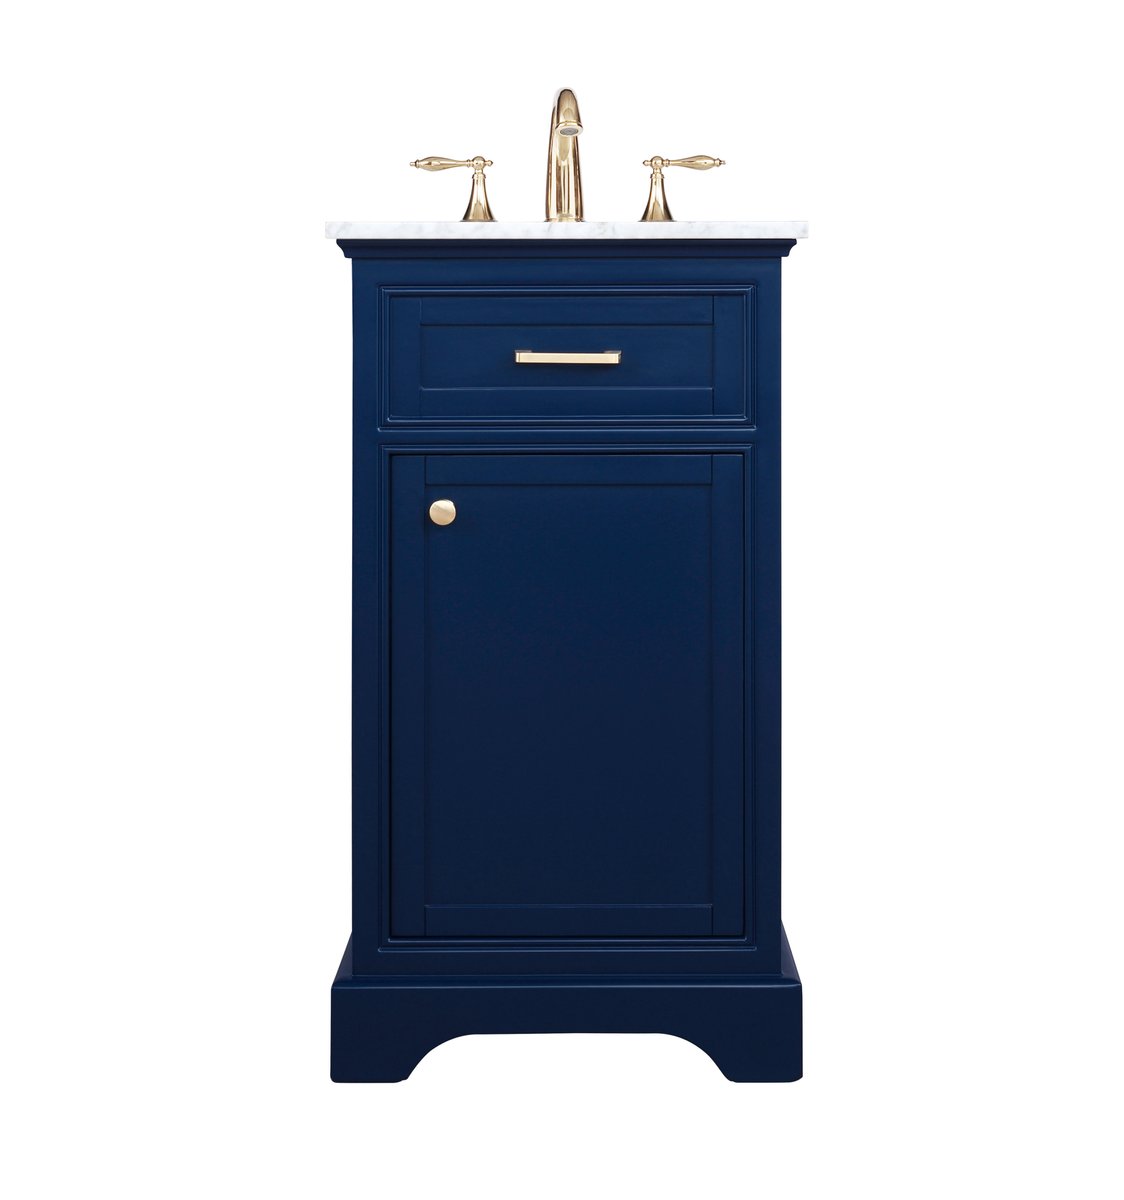 VF15019BL 19" Single Bathroom Vanity in Blue